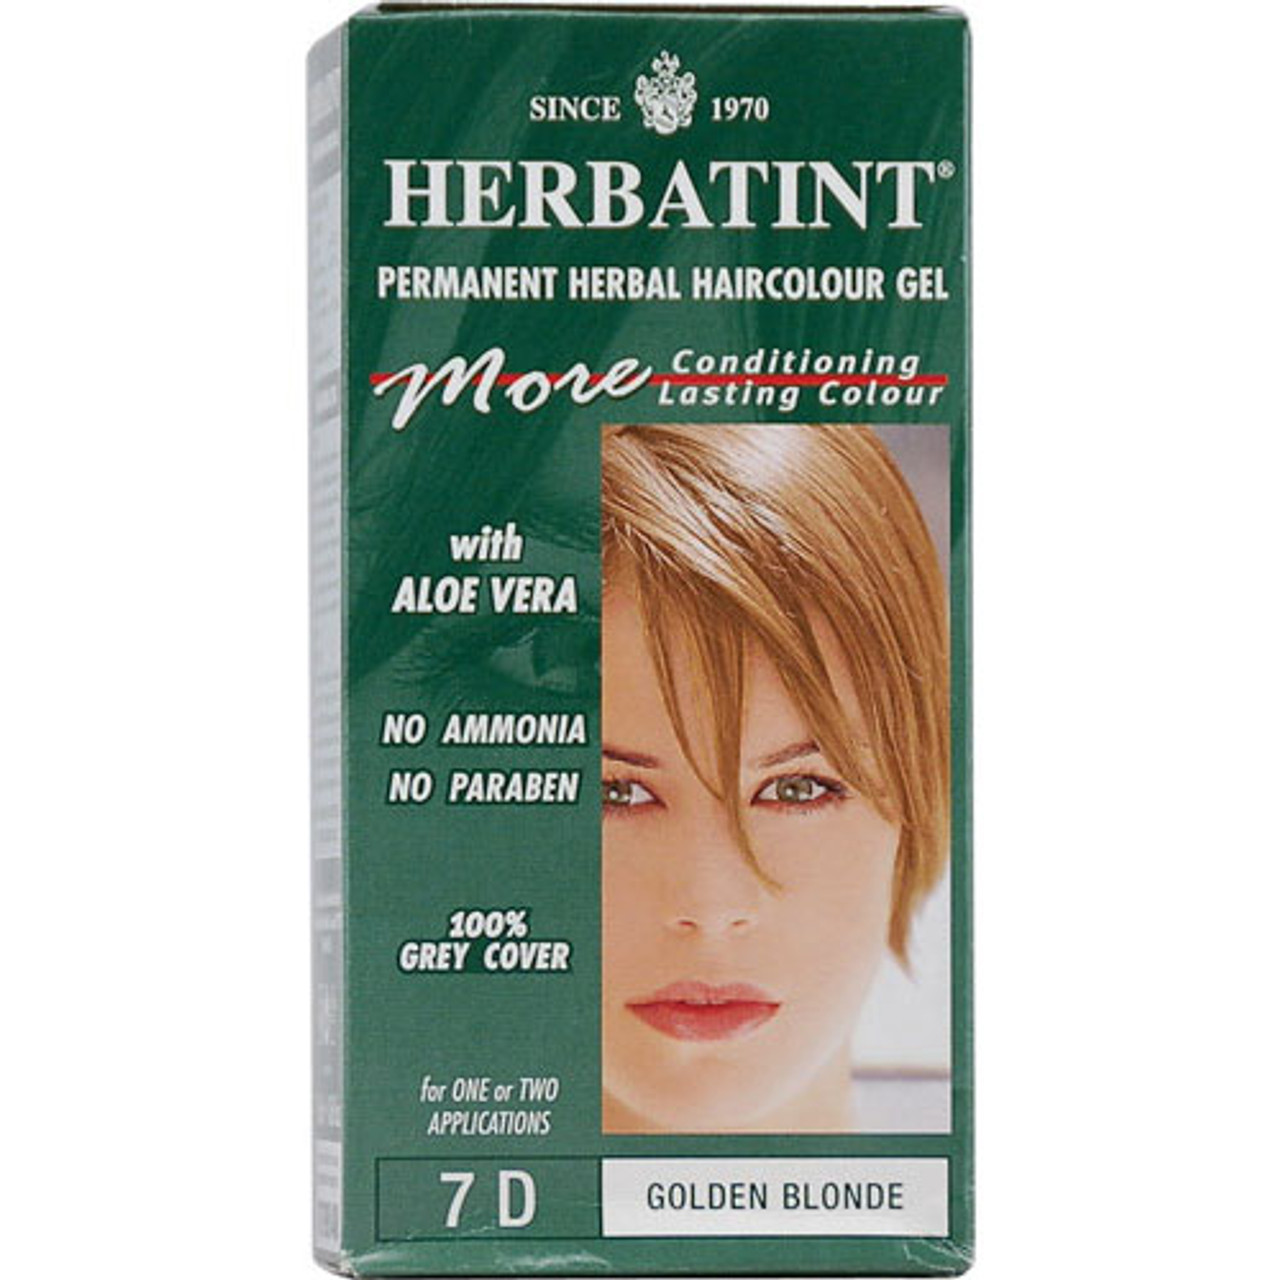 Herbatint Permanent Herbal Haircolor Gel #7D Golden Blonde - 4.56 Oz -  myotcstore.com